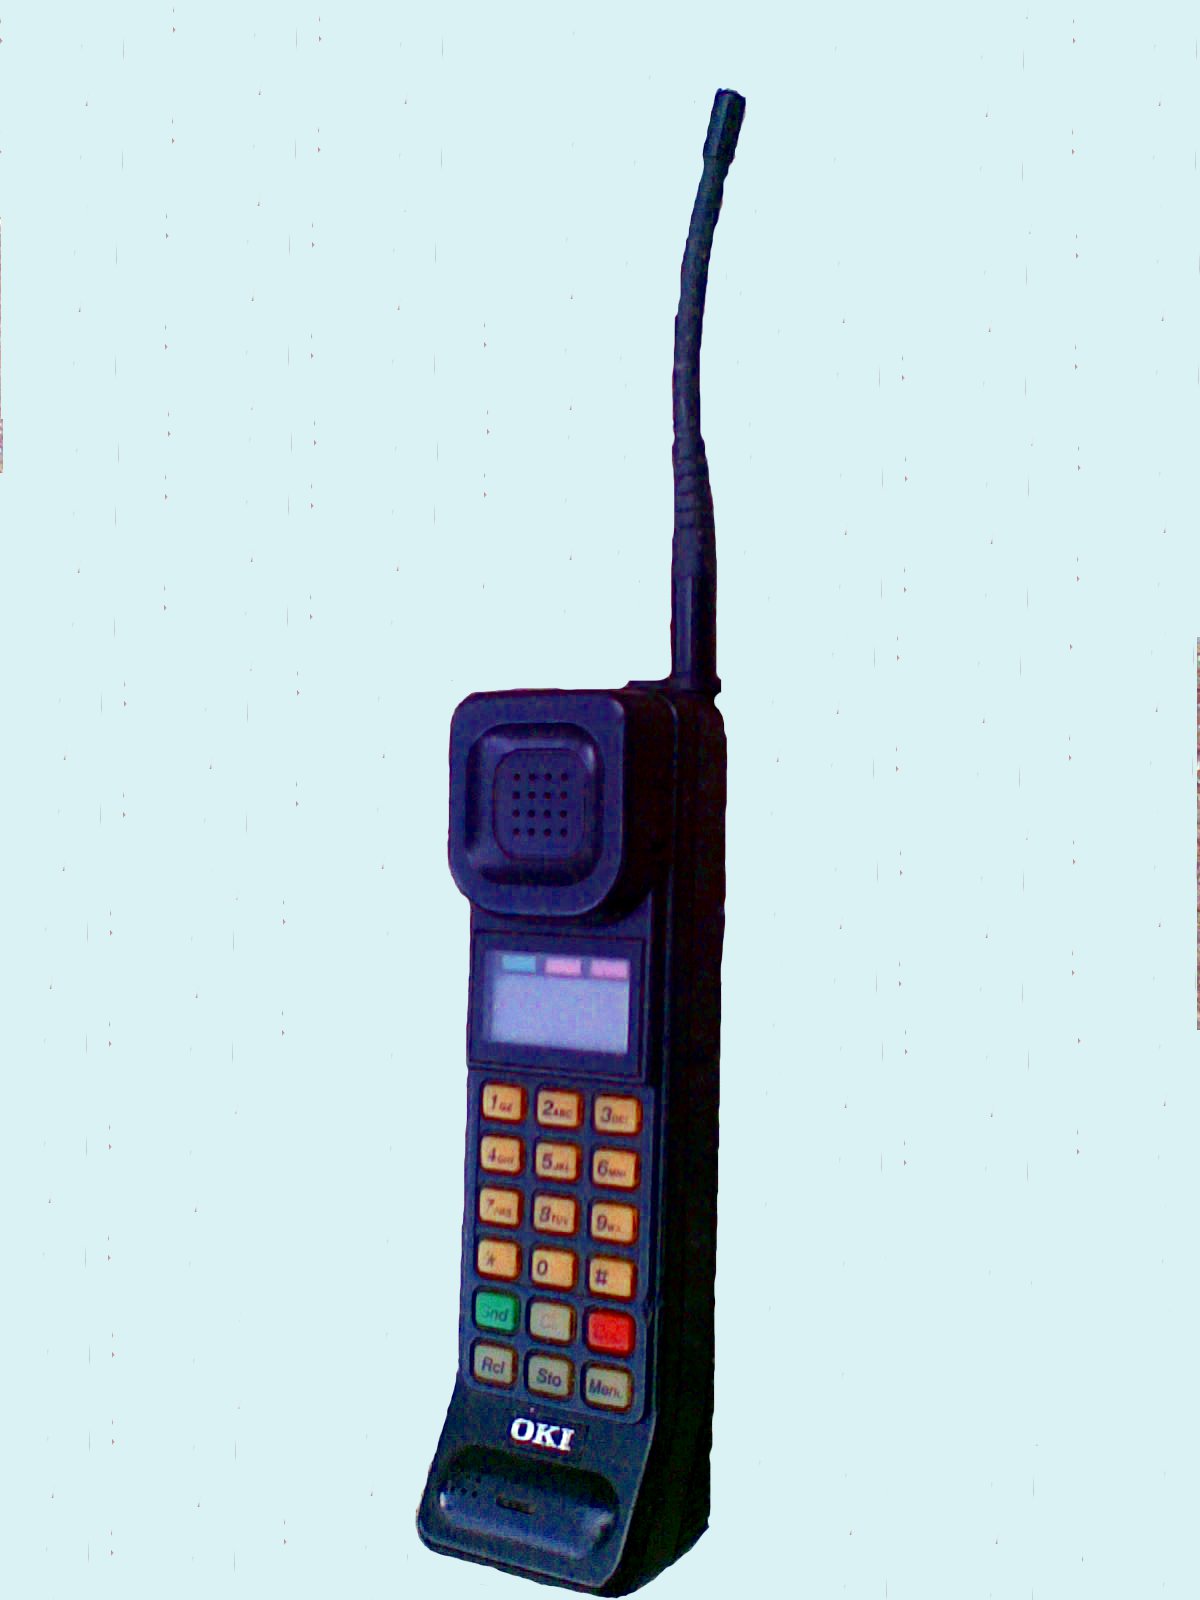 OKI 1990 mobile phone